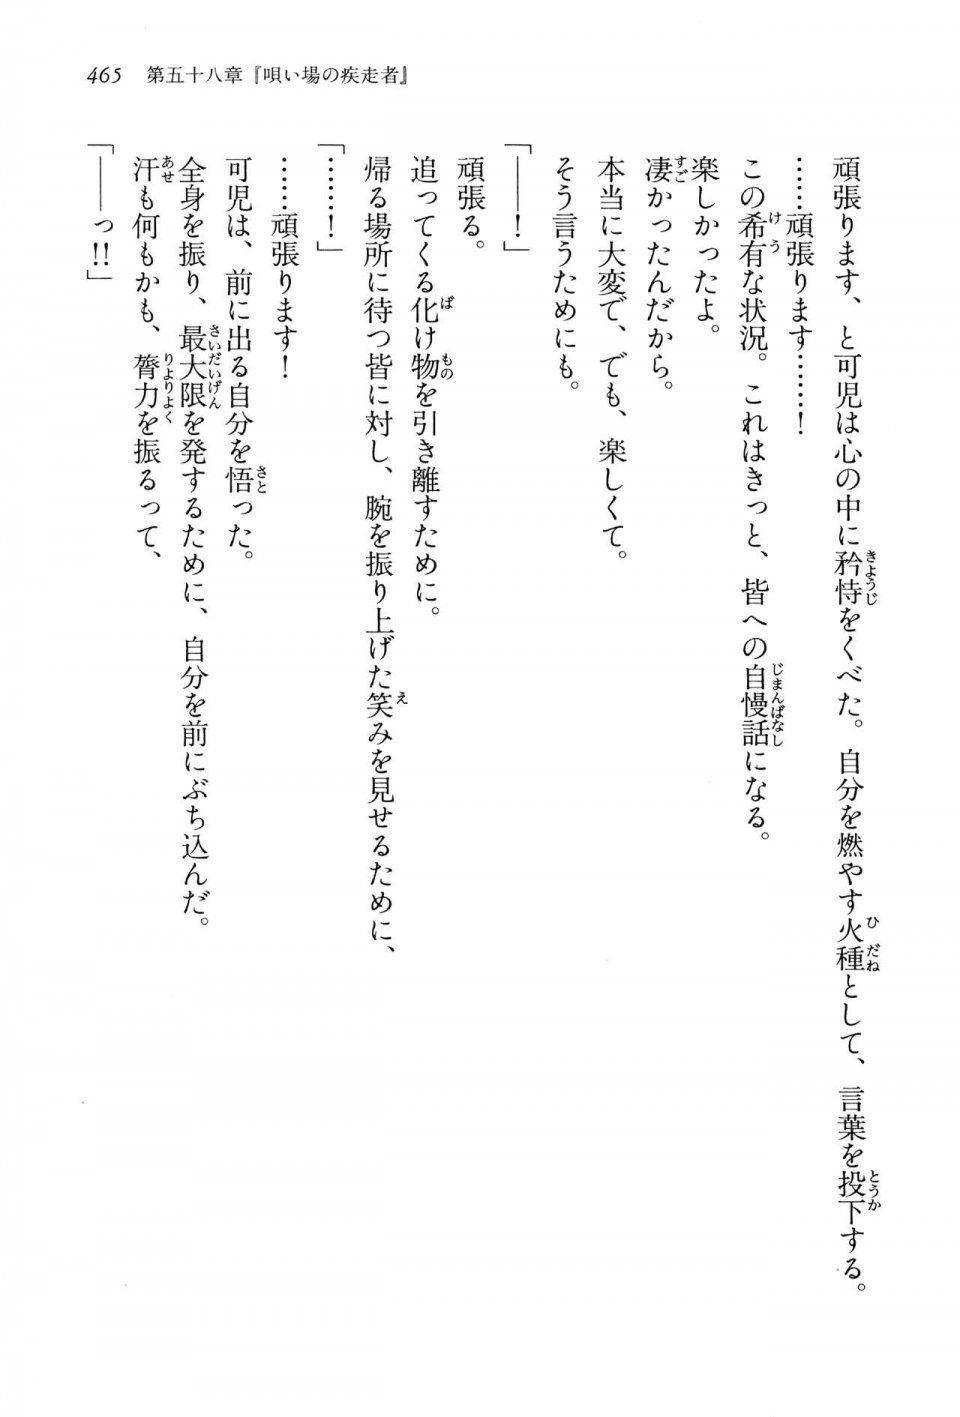 Kyoukai Senjou no Horizon LN Vol 15(6C) Part 1 - Photo #465